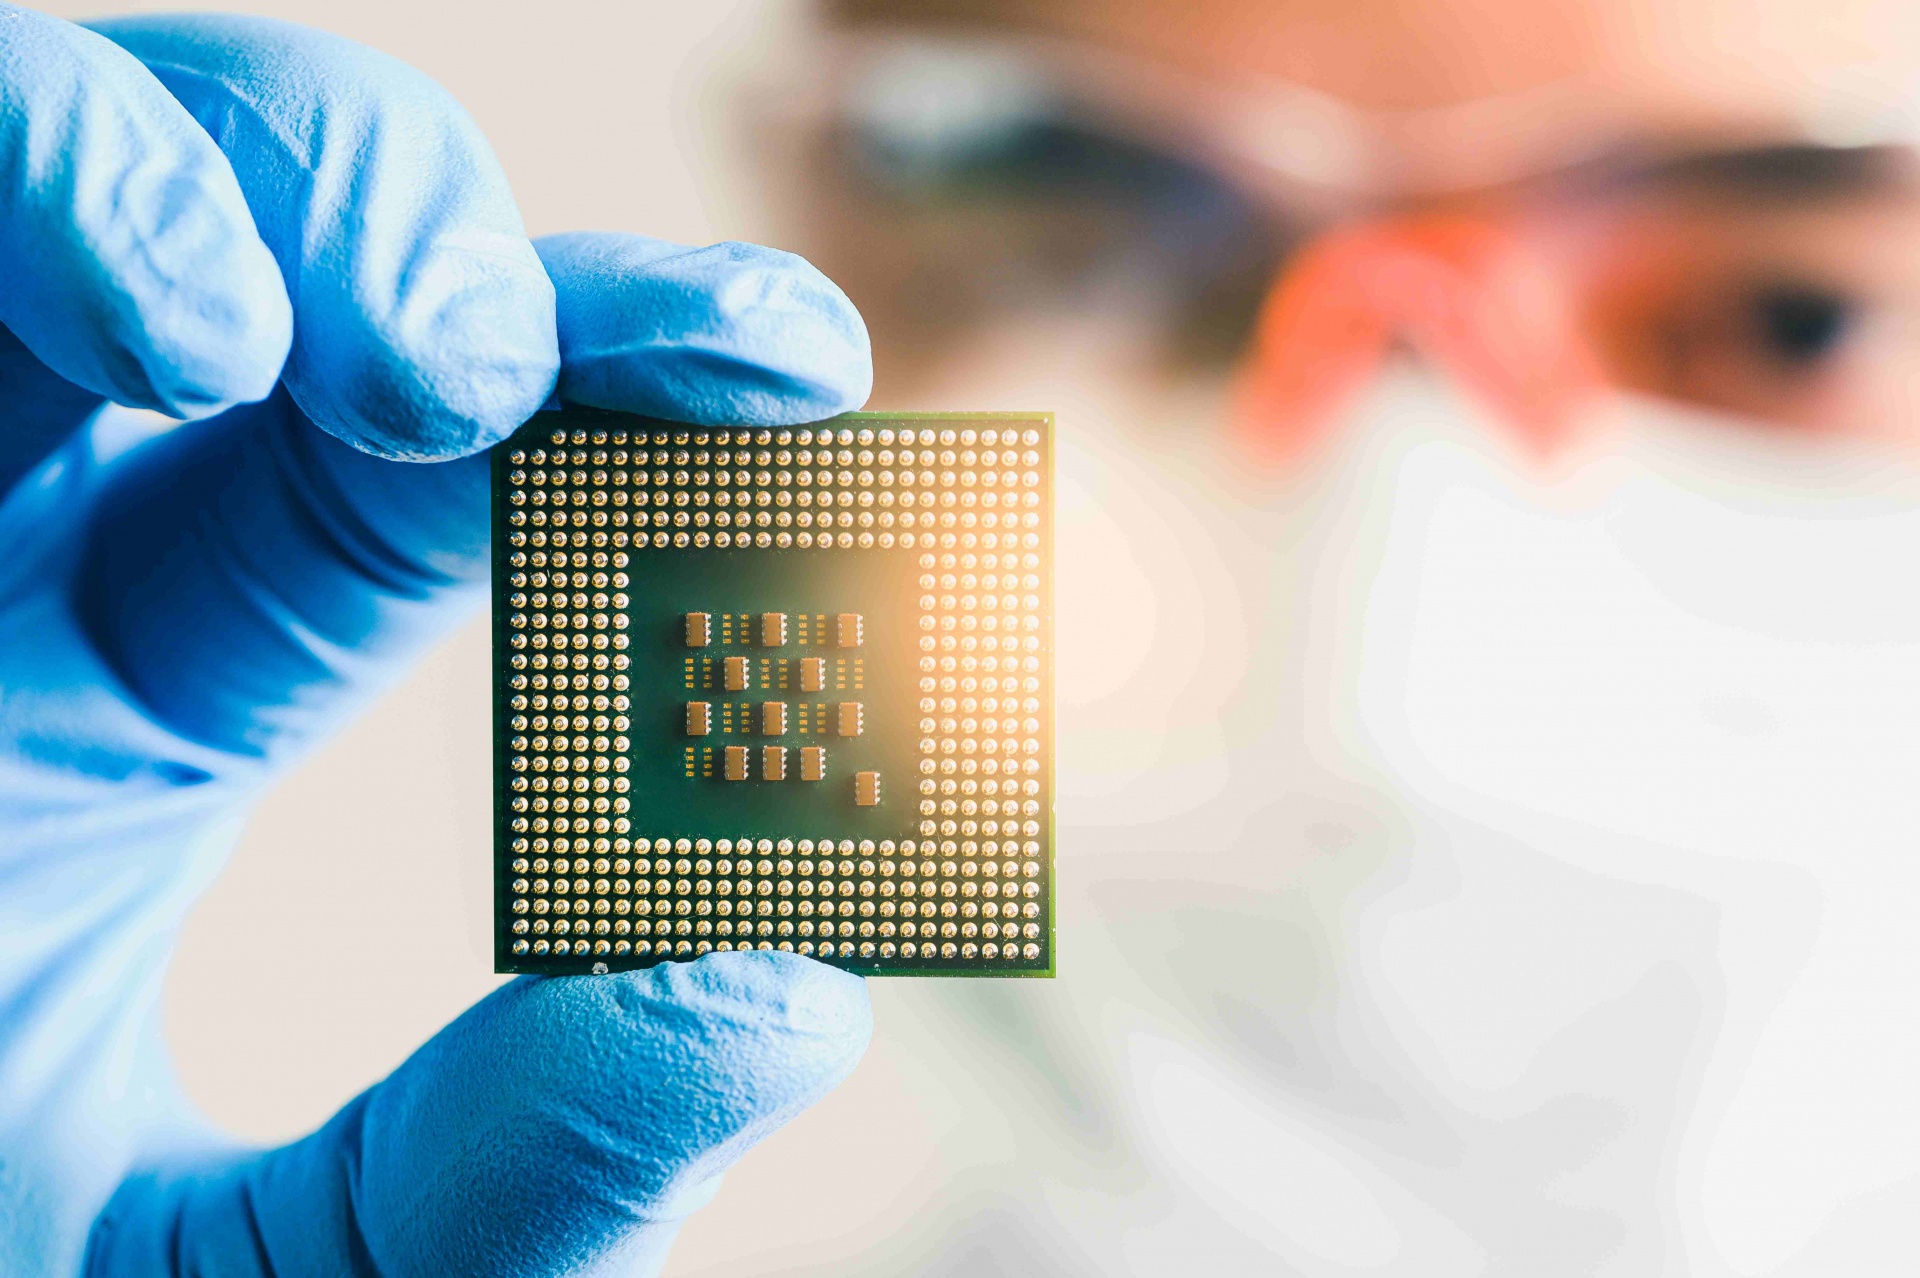 phenikaa to train 8000 semiconductor chip design engineers